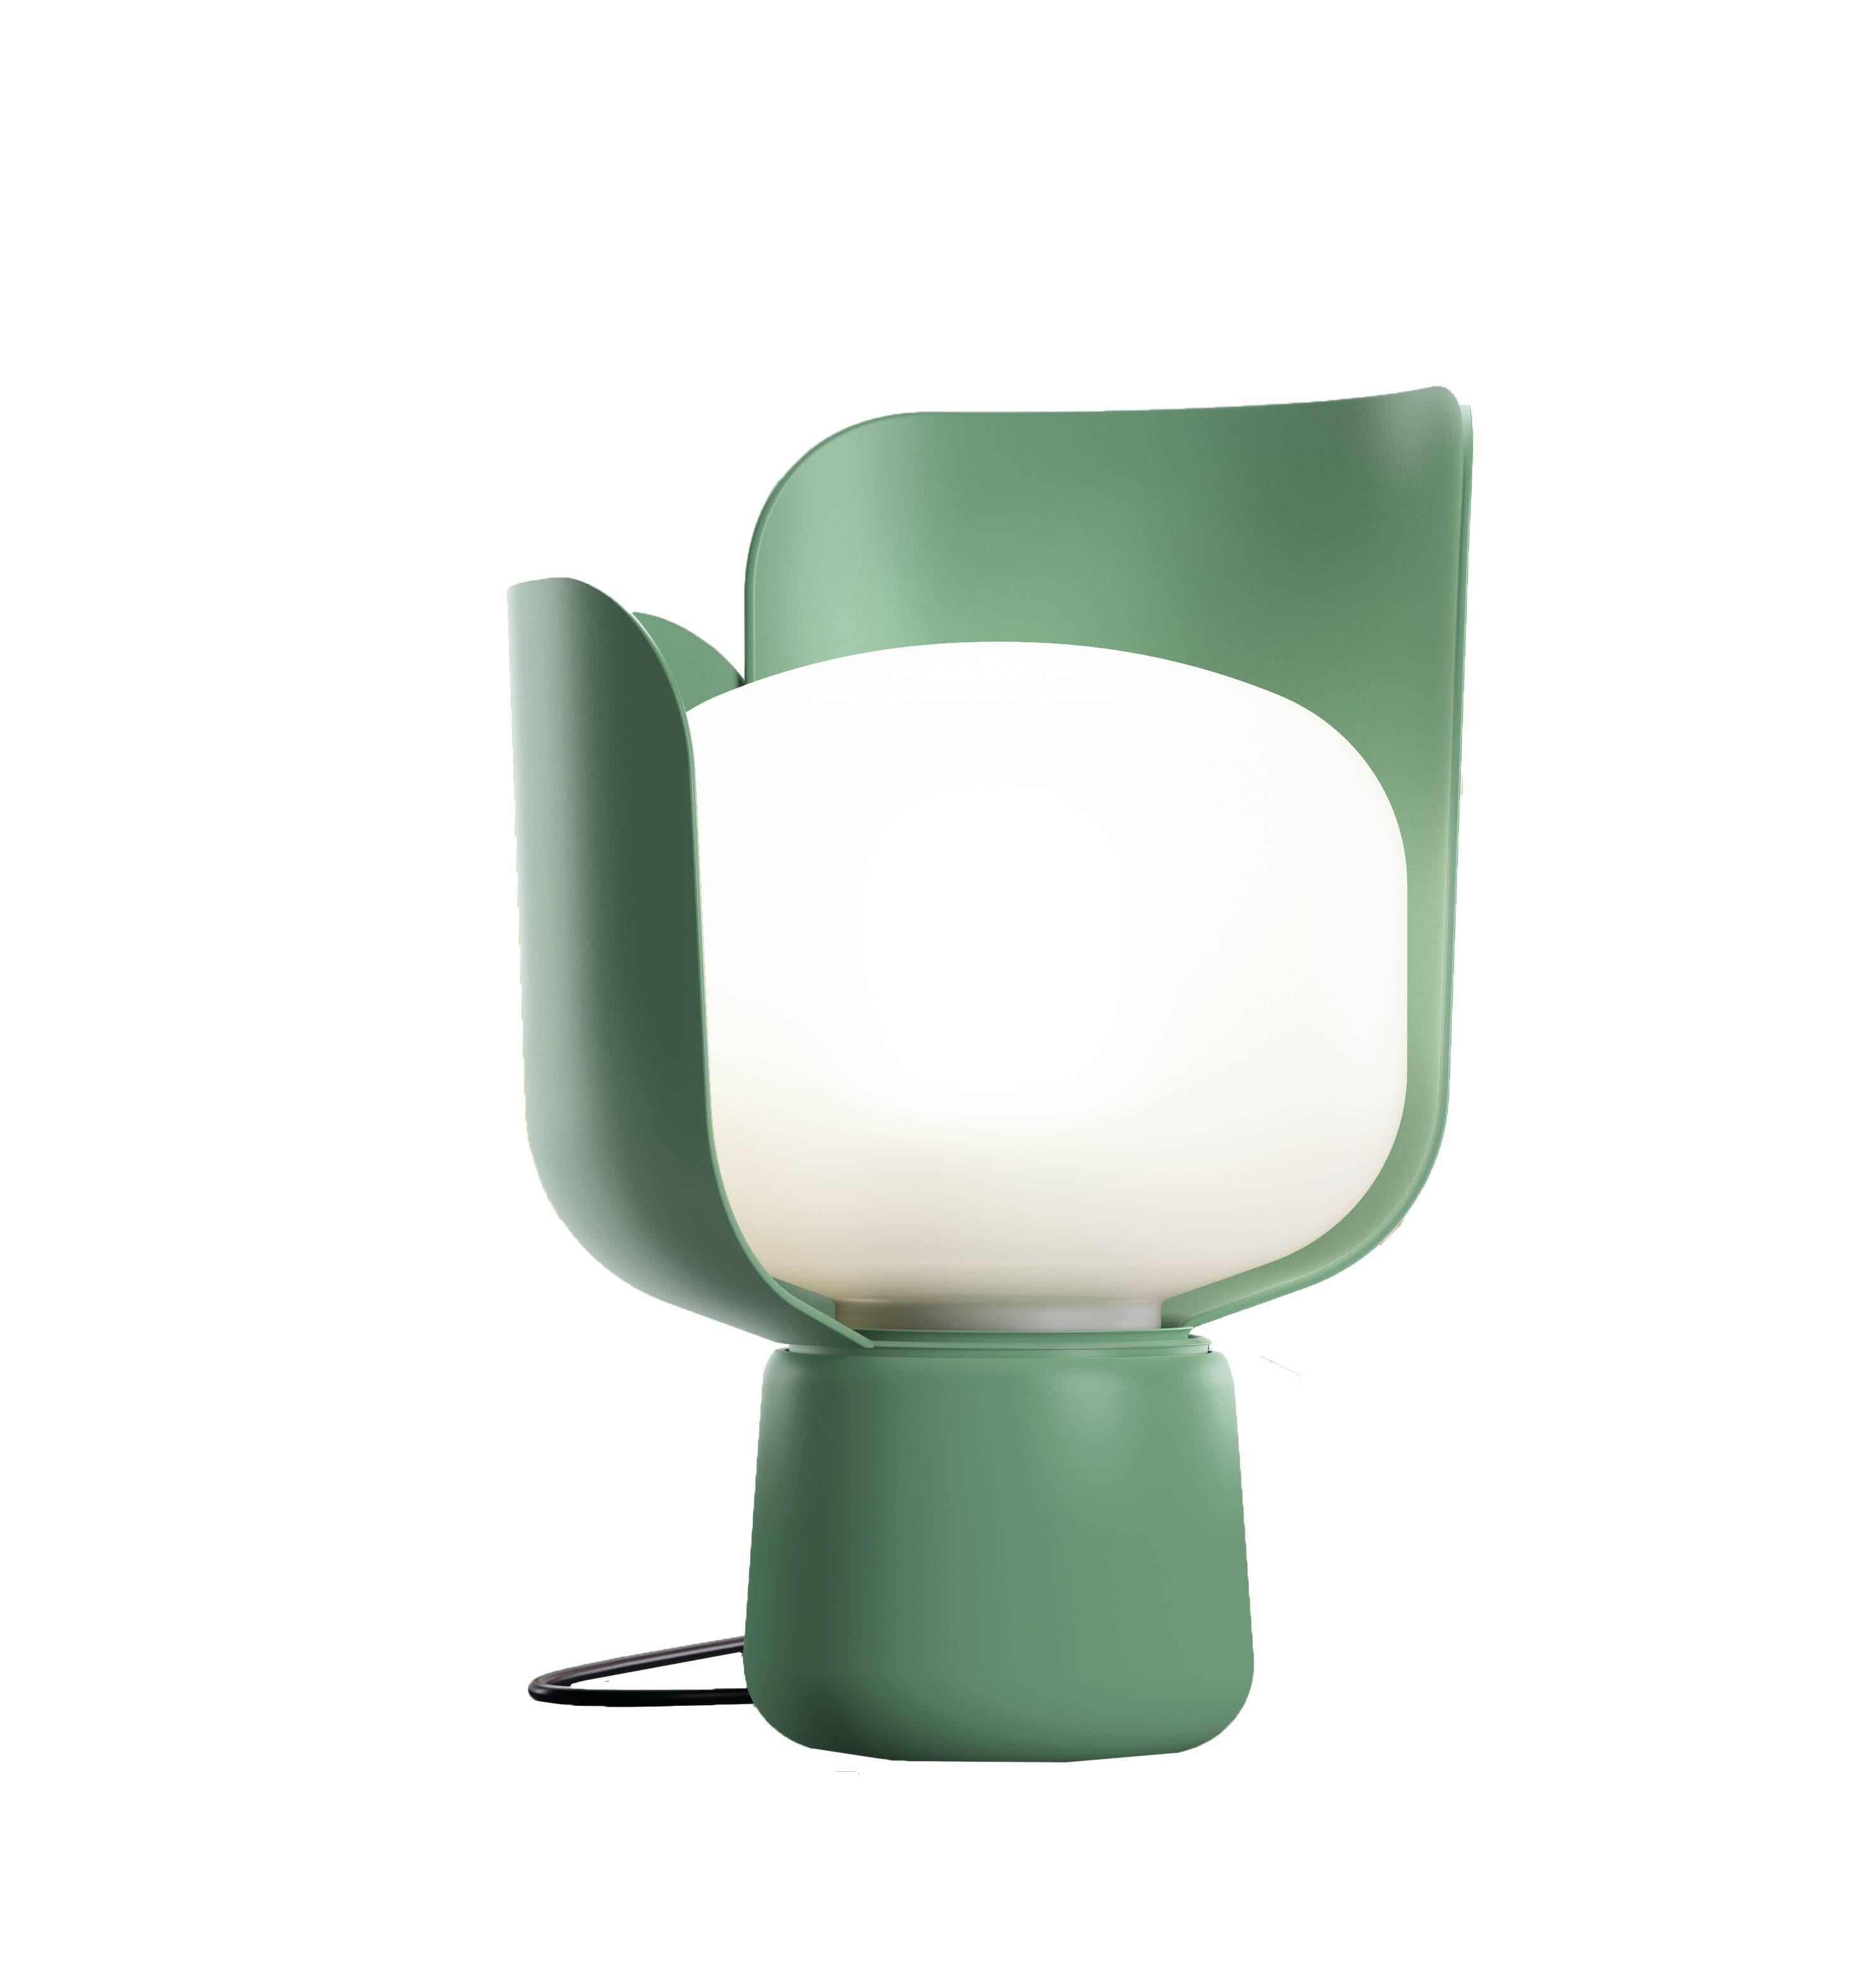 Italian BLOM Table Lamp Designed by Andreas Engesvik for Fontana Arte